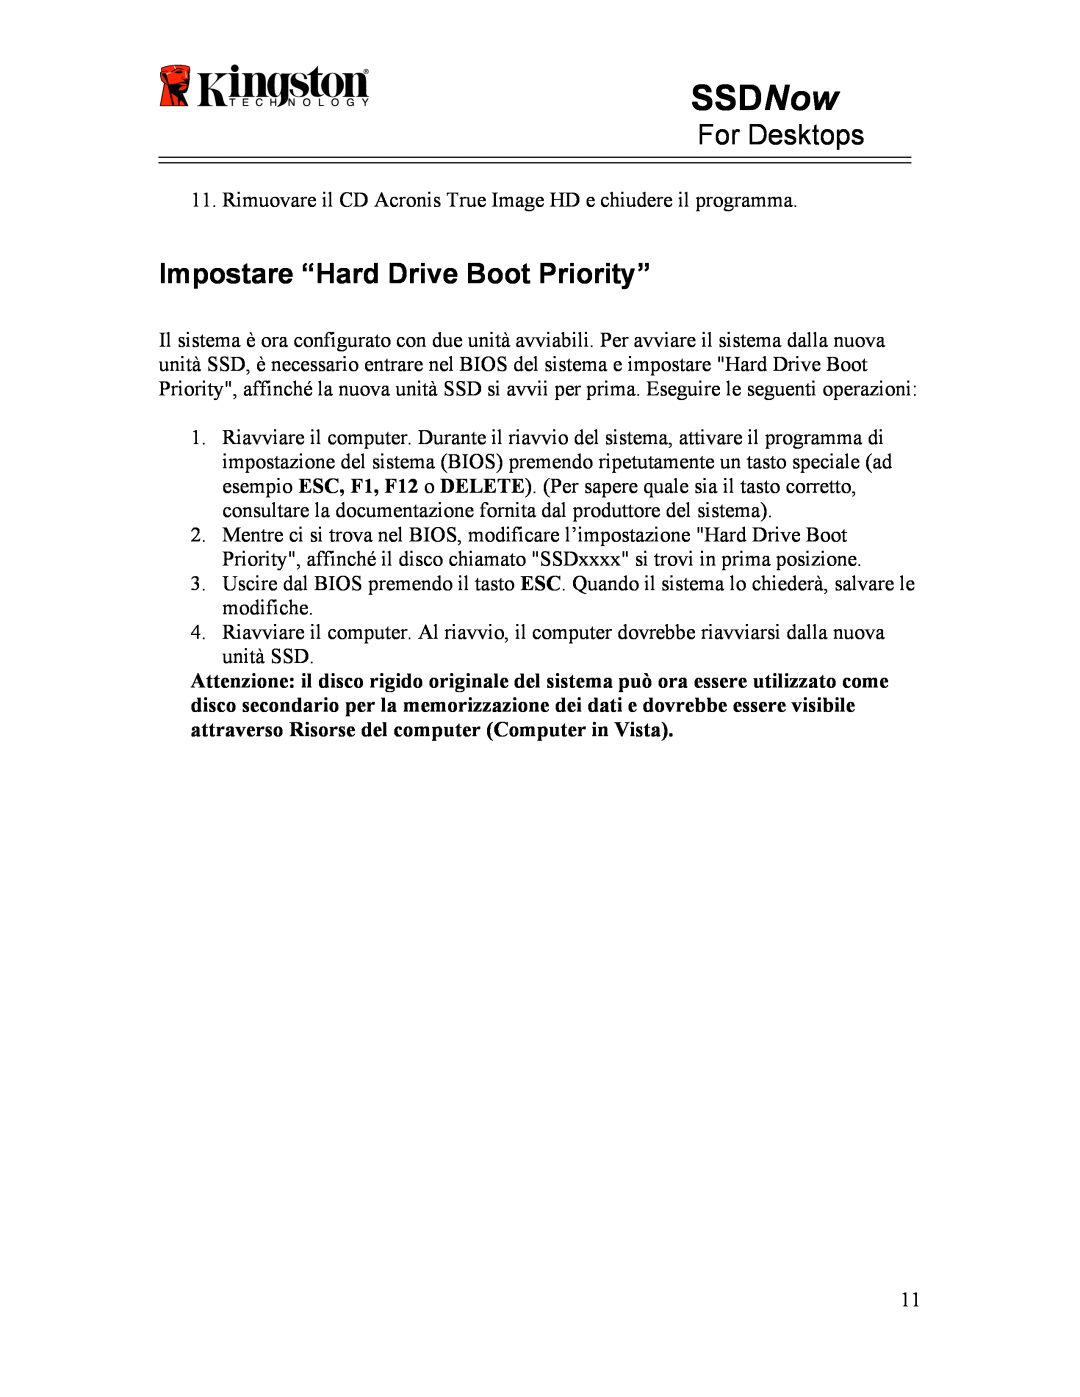 Kingston Technology 07-16-2009 manual Impostare “Hard Drive Boot Priority”, SSDNow, For Desktops 